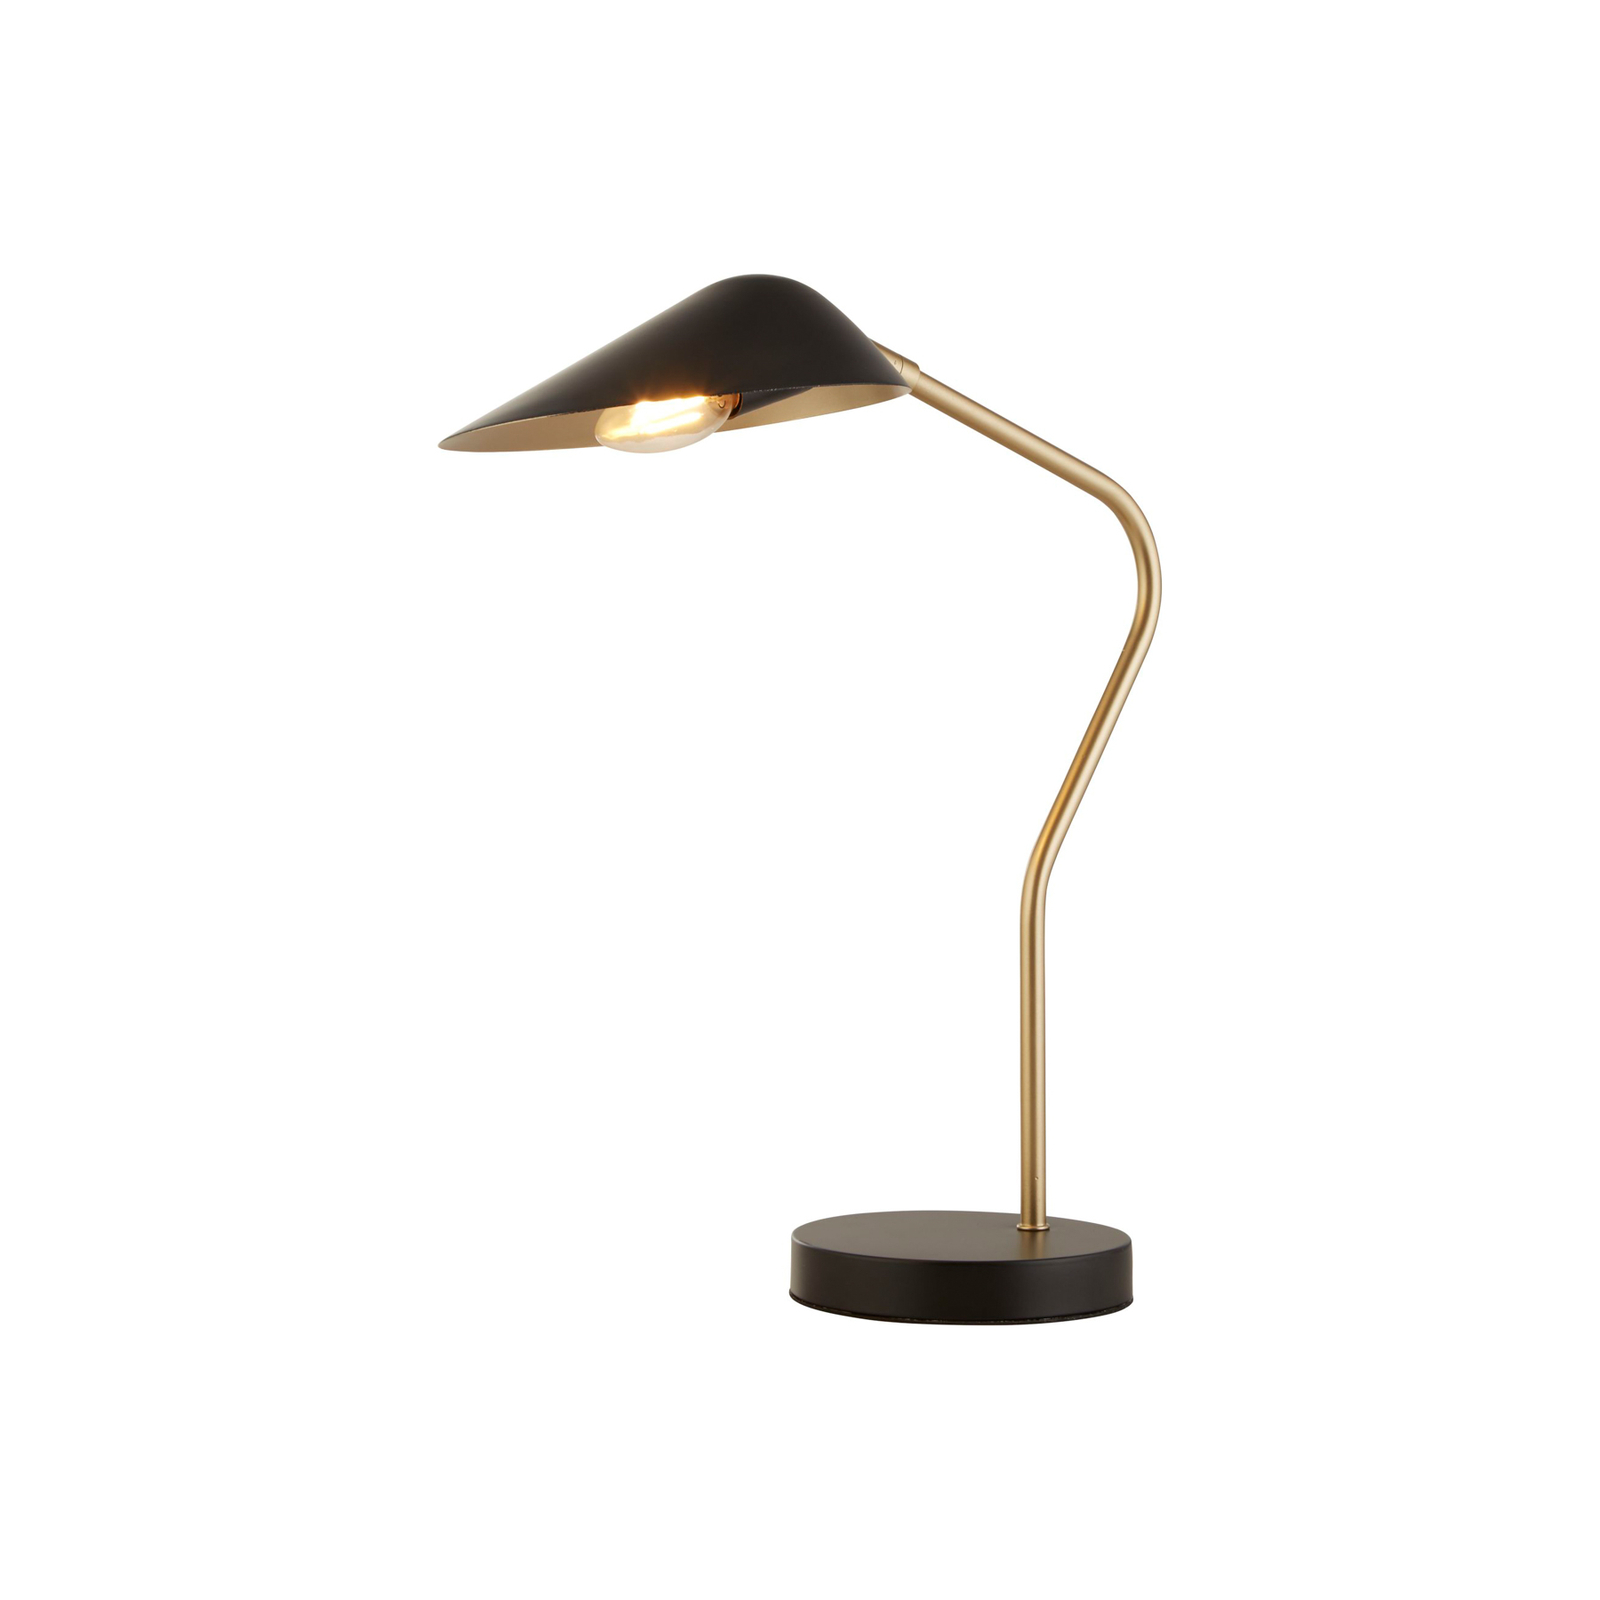 X Swan table lamp